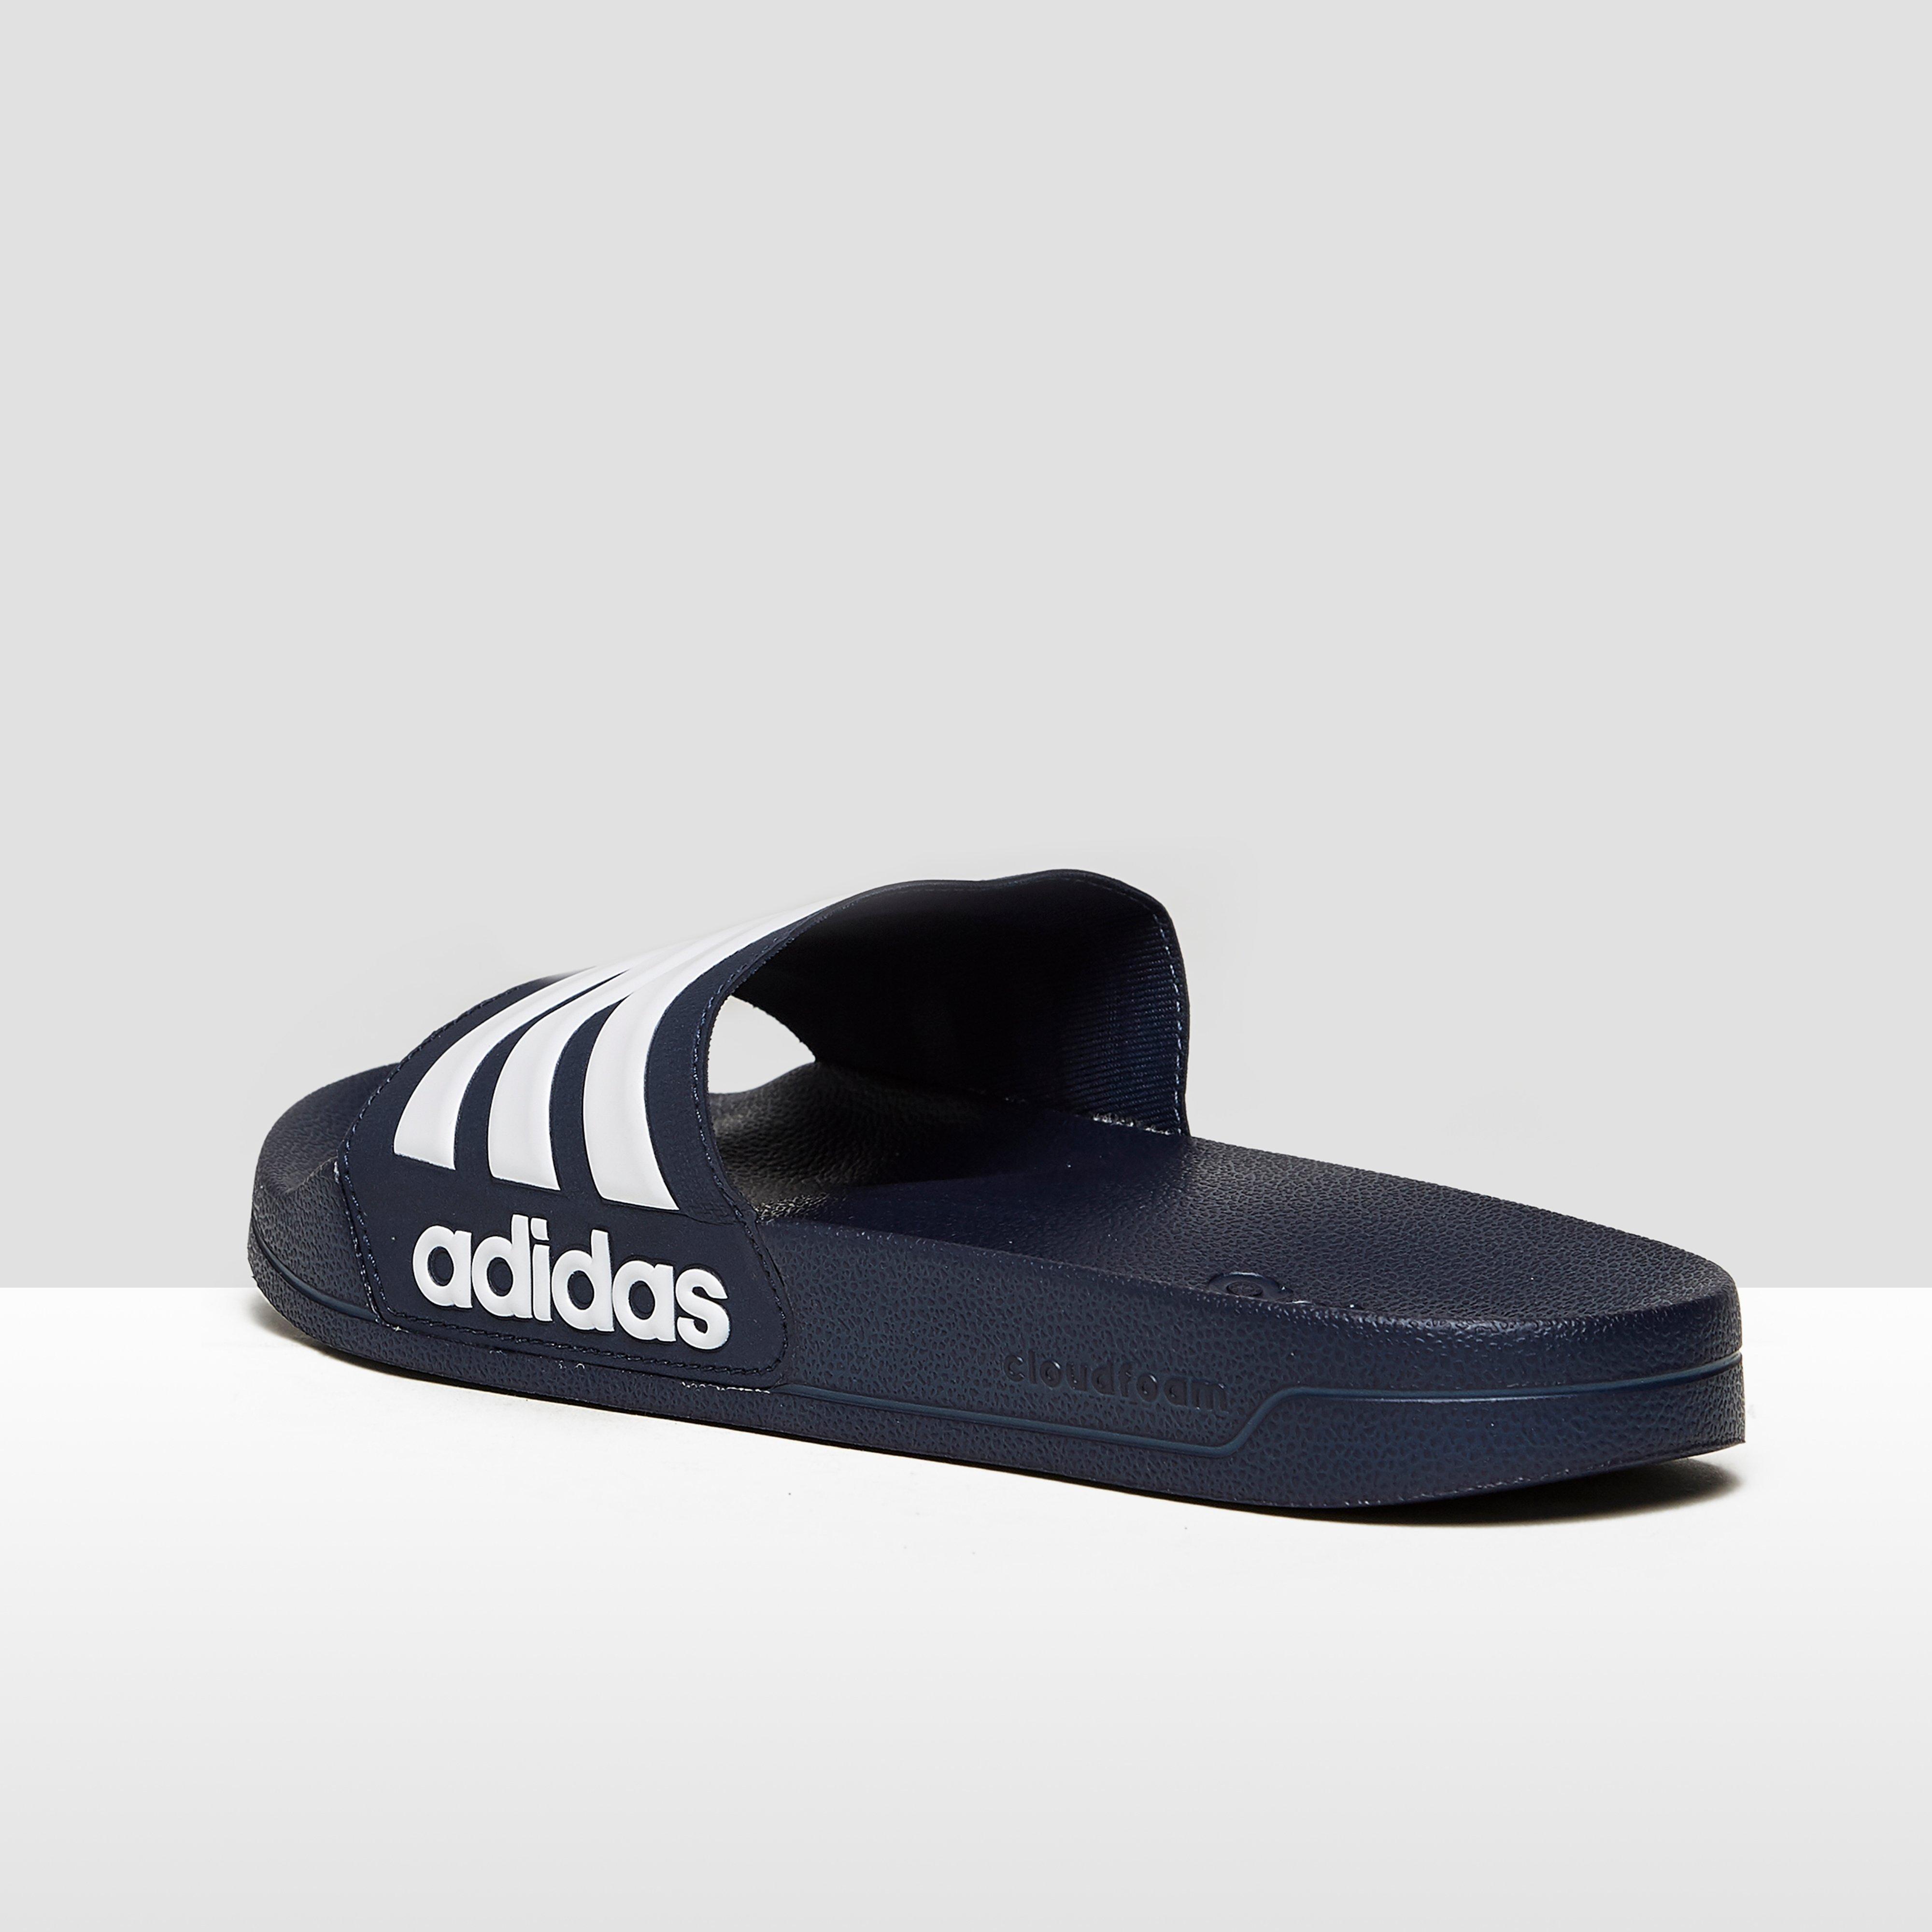 adidas cloudfoam slippers